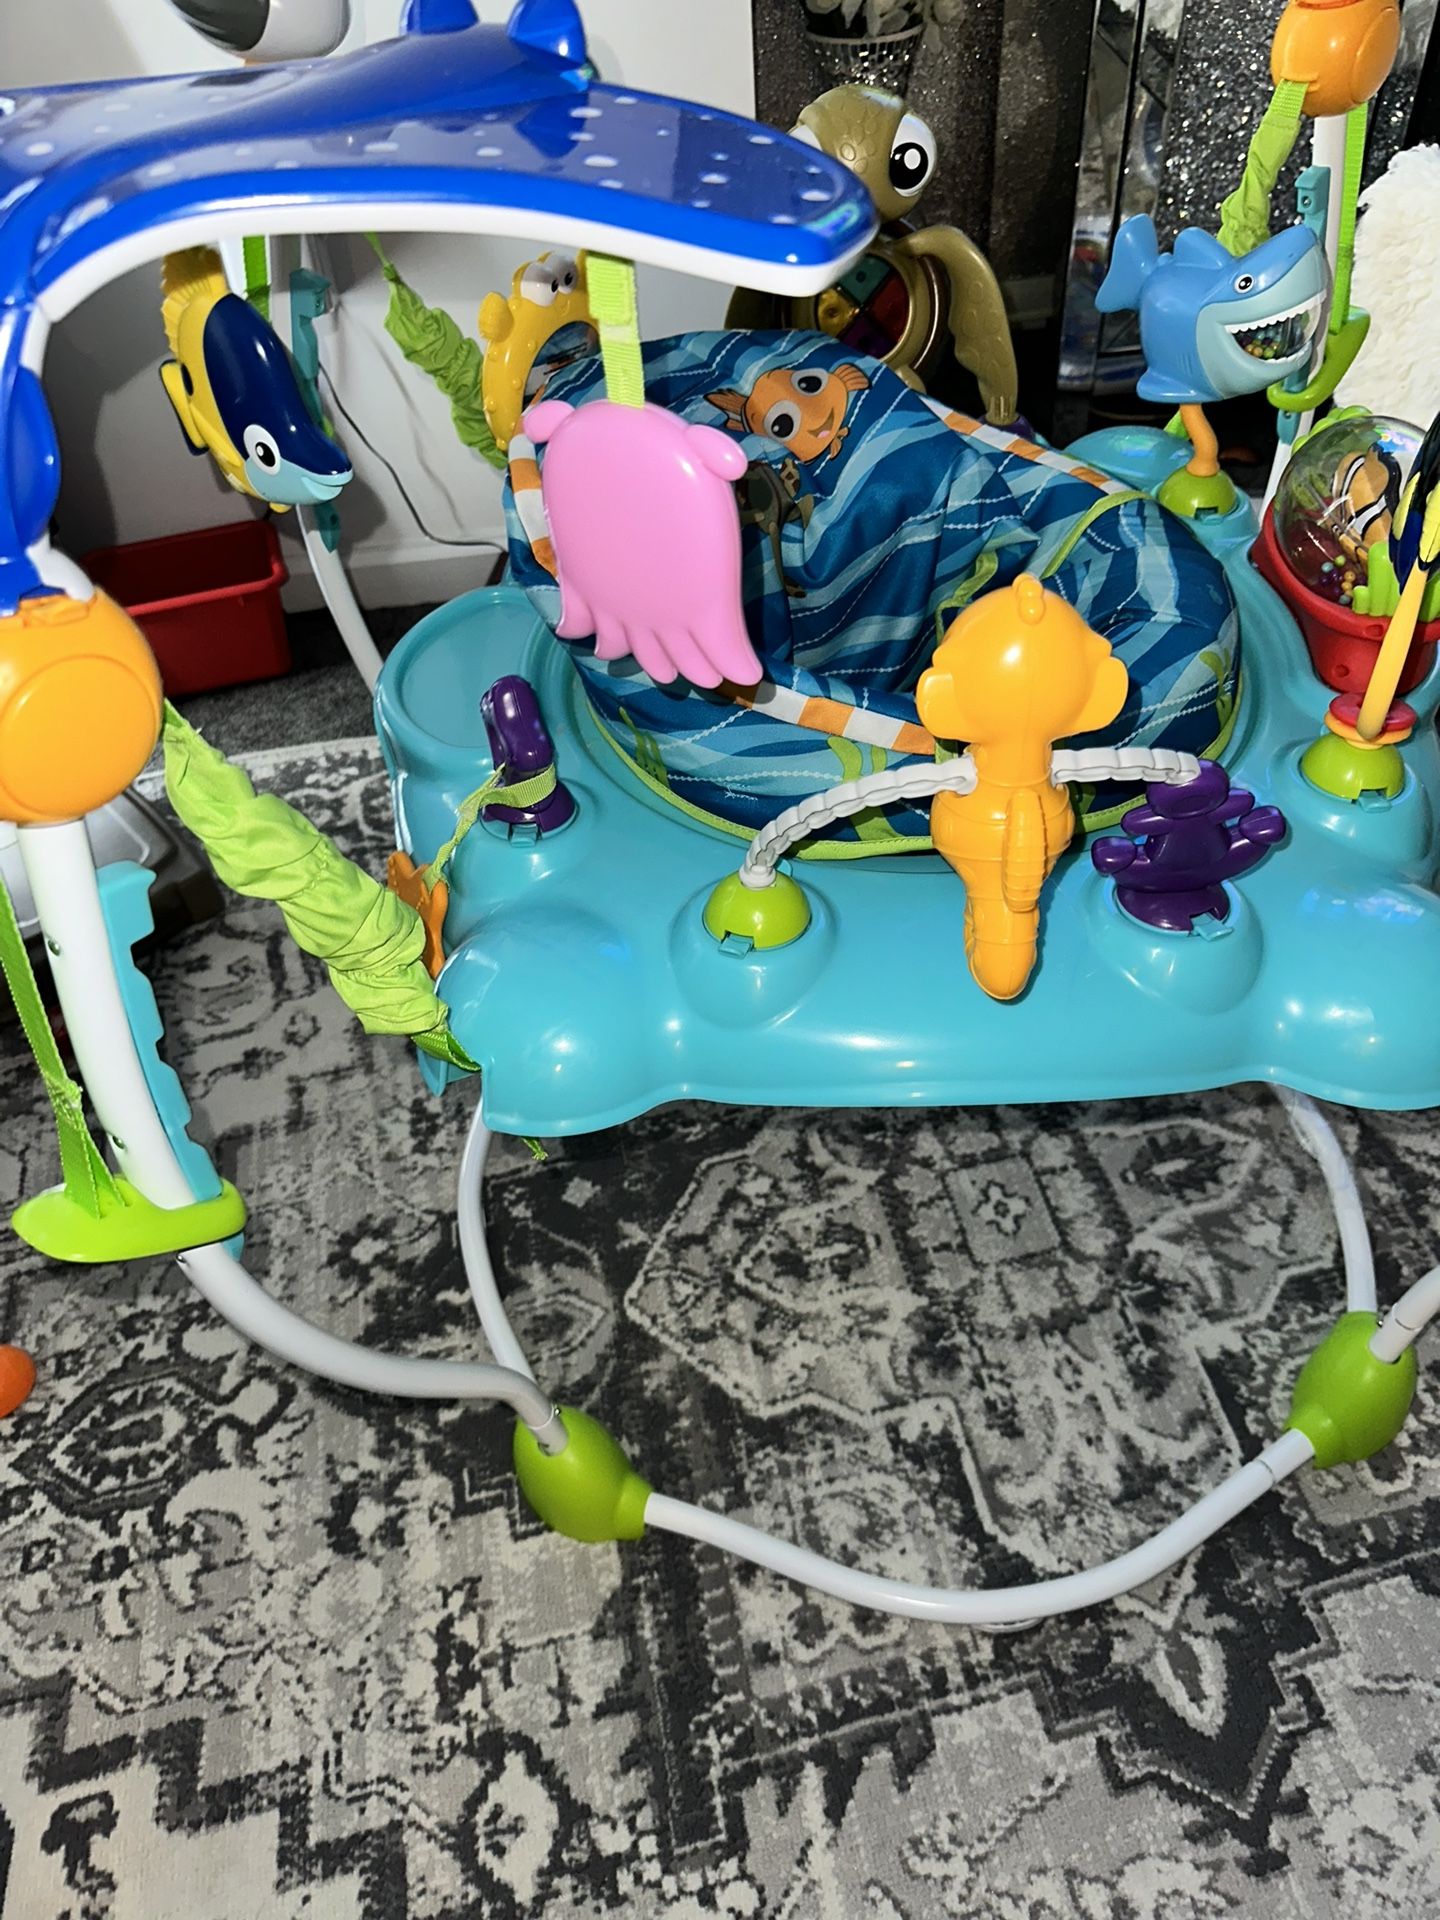 Bright Starts Disney Baby Finding Nemo Sea of Activities Baby Activity Center Jumper